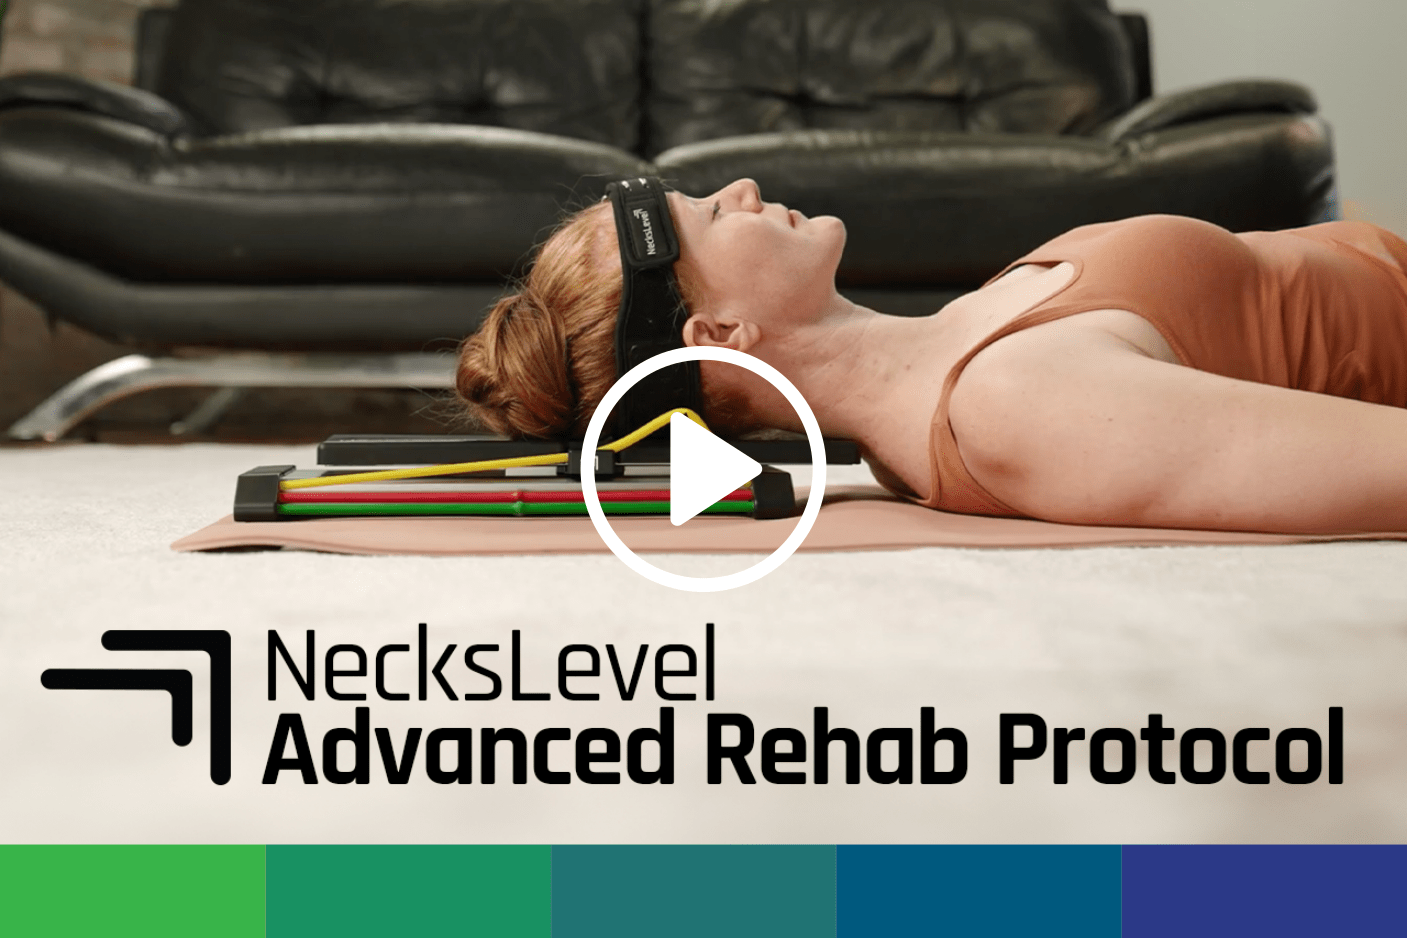 NecksLevel rehab protocol video thumbnail